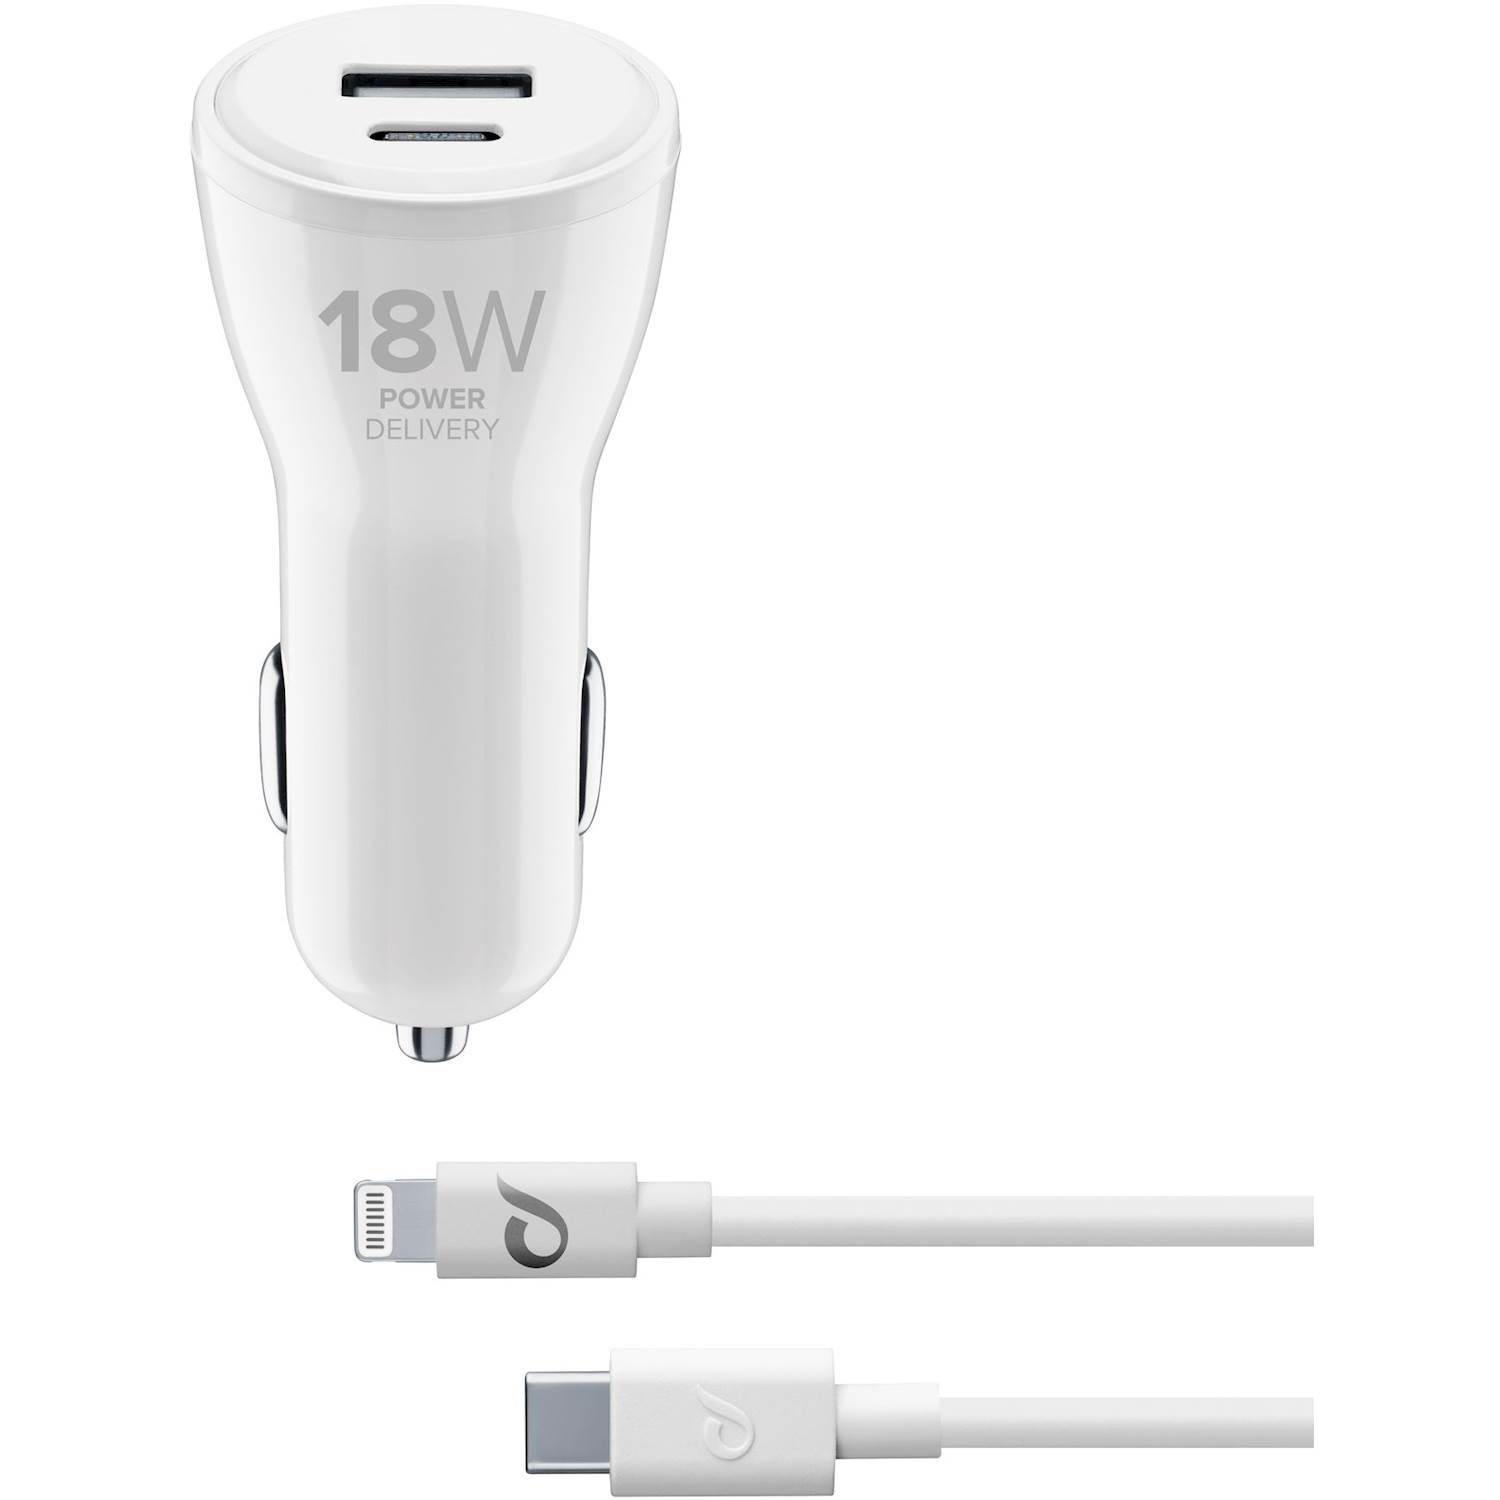 Cellularline USB-C™ Car Charger Dual Kit 18W + 12W – USB-C to Lightning